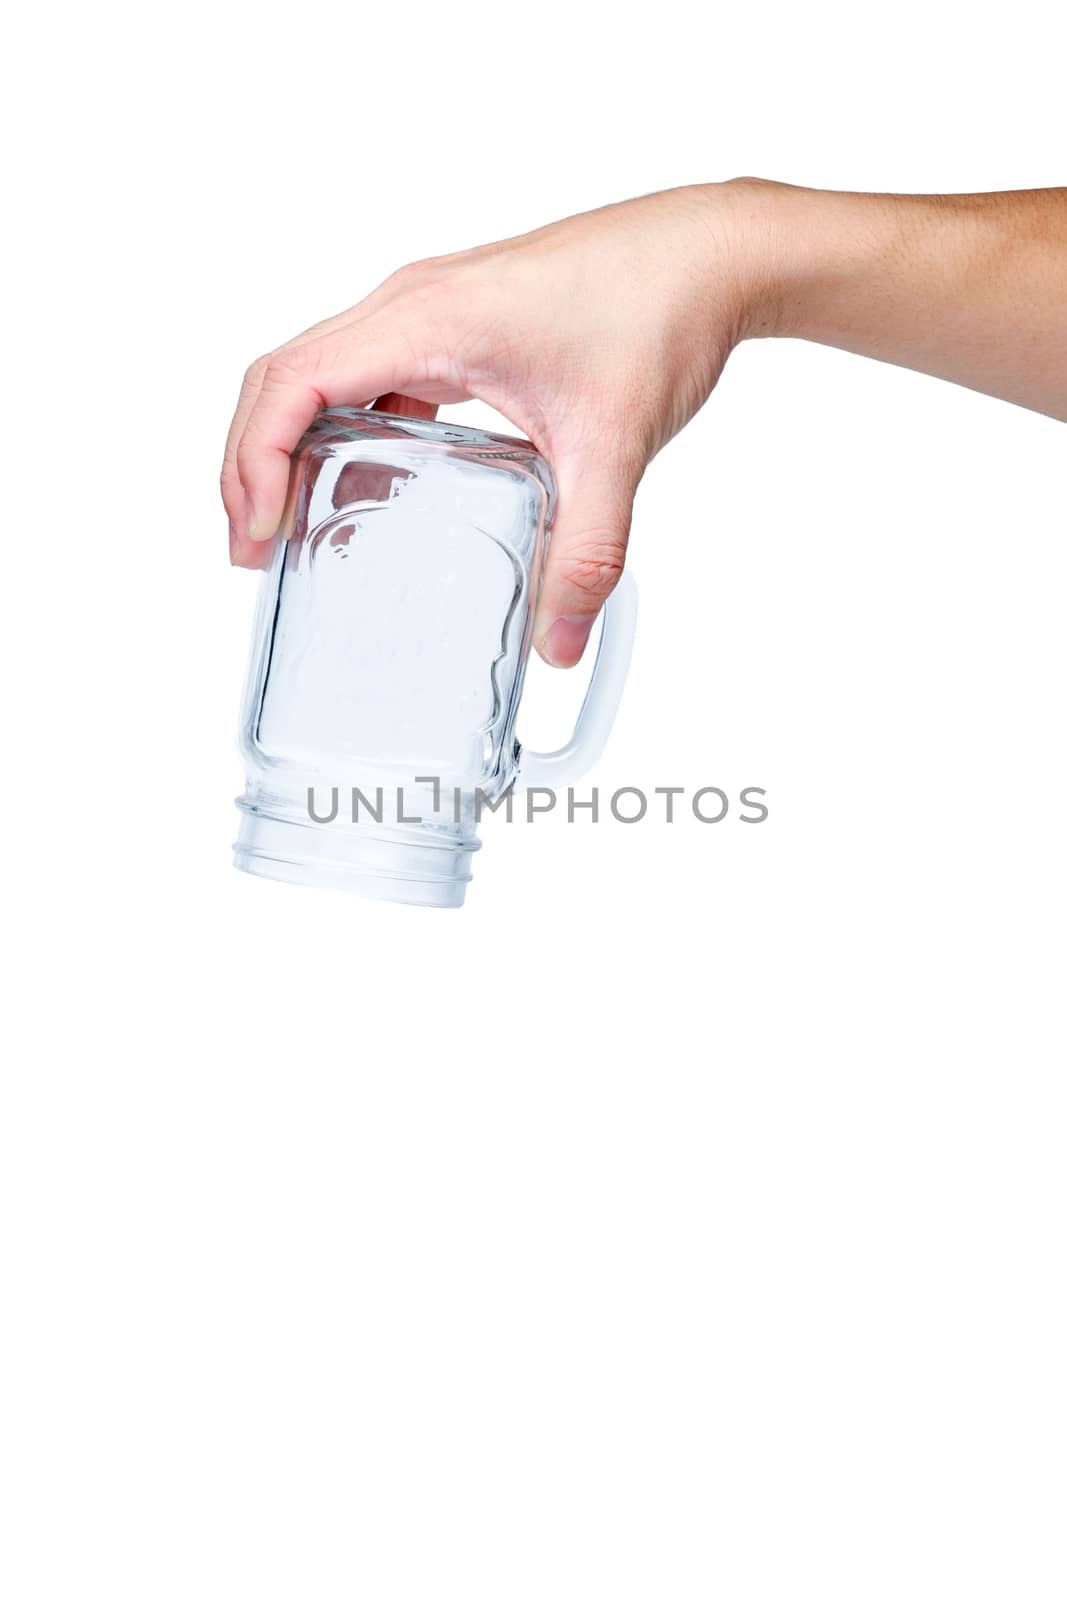 hand holding speedlight flash isolate on white background